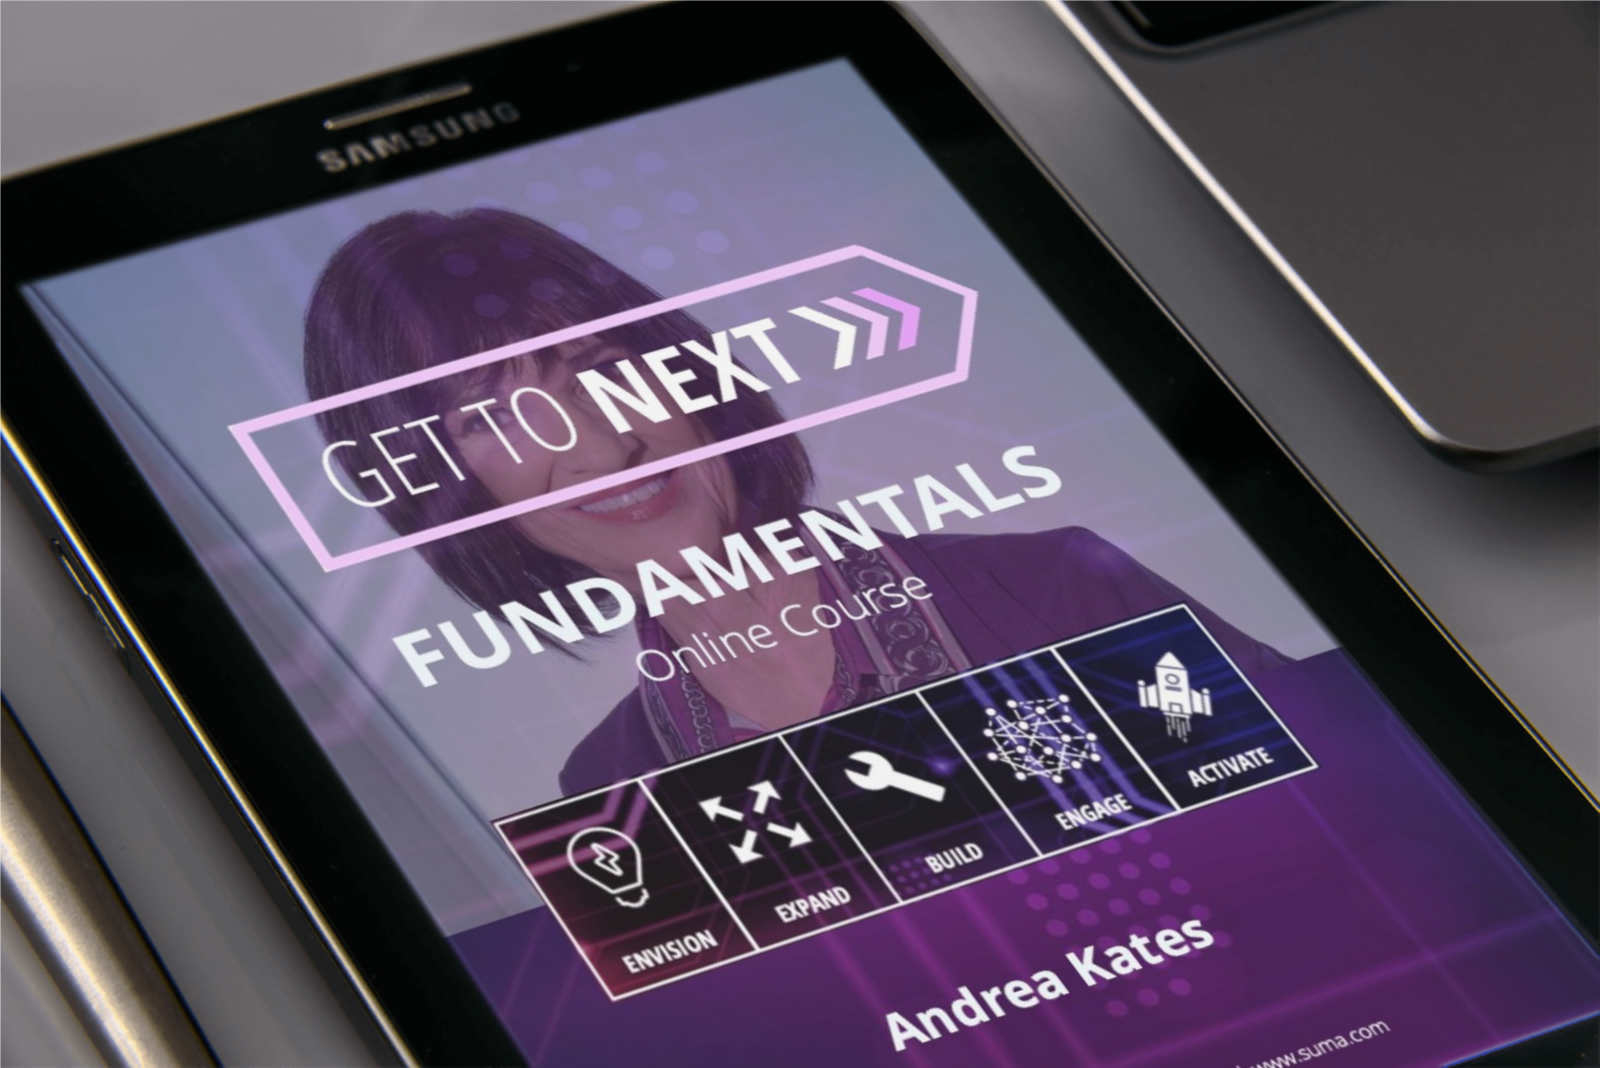 Get To Next | Fundamentals